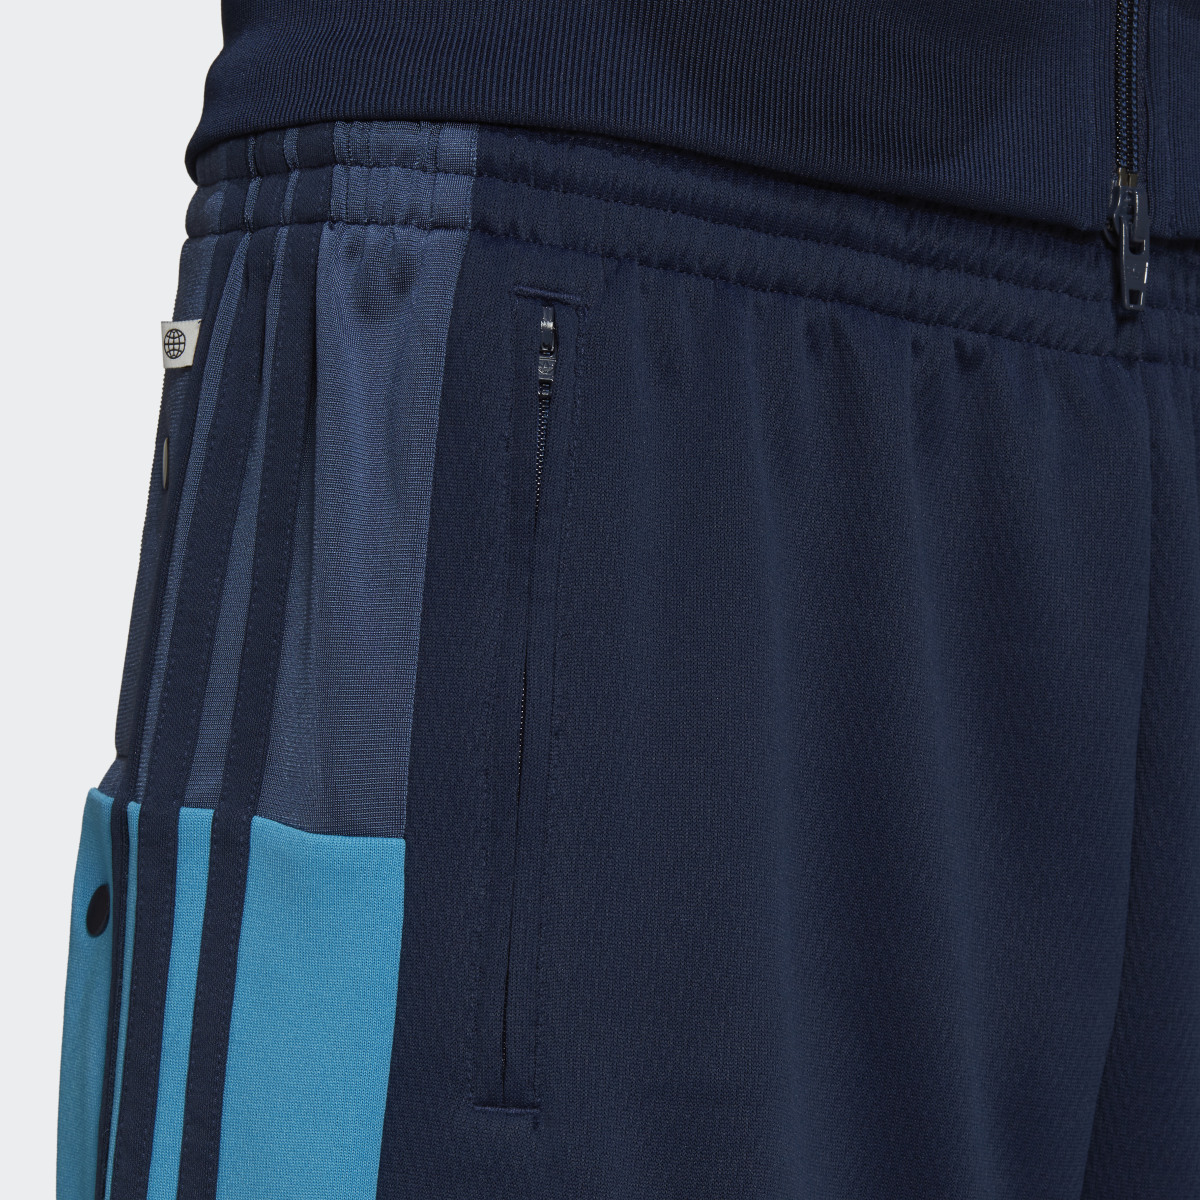 Adidas Adicolor Shorts. 6